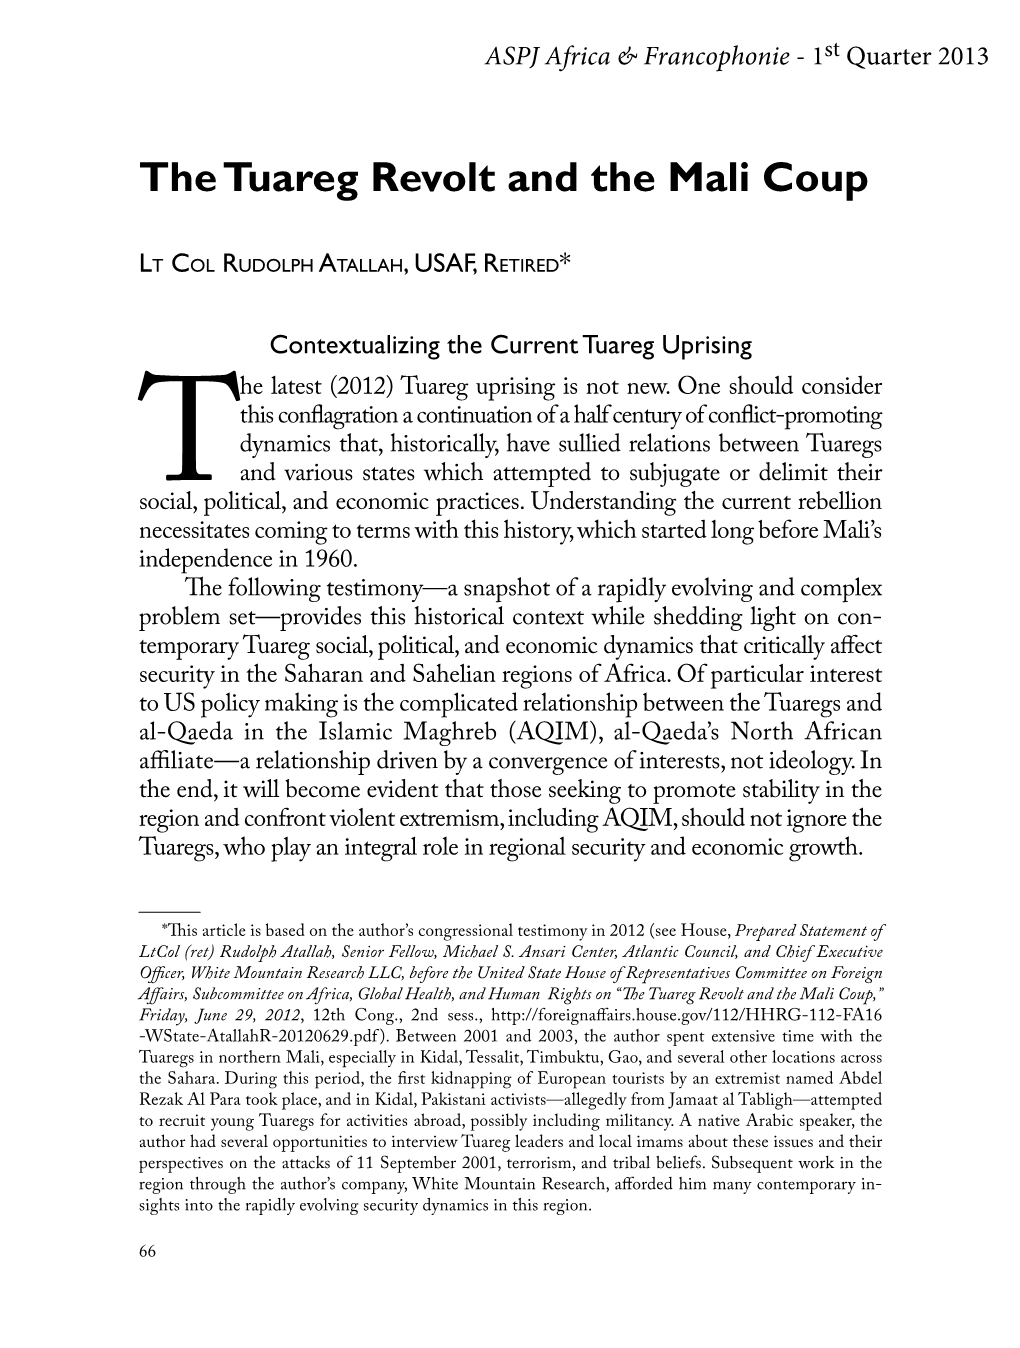 The Tuareg Revolt and the Mali Coup